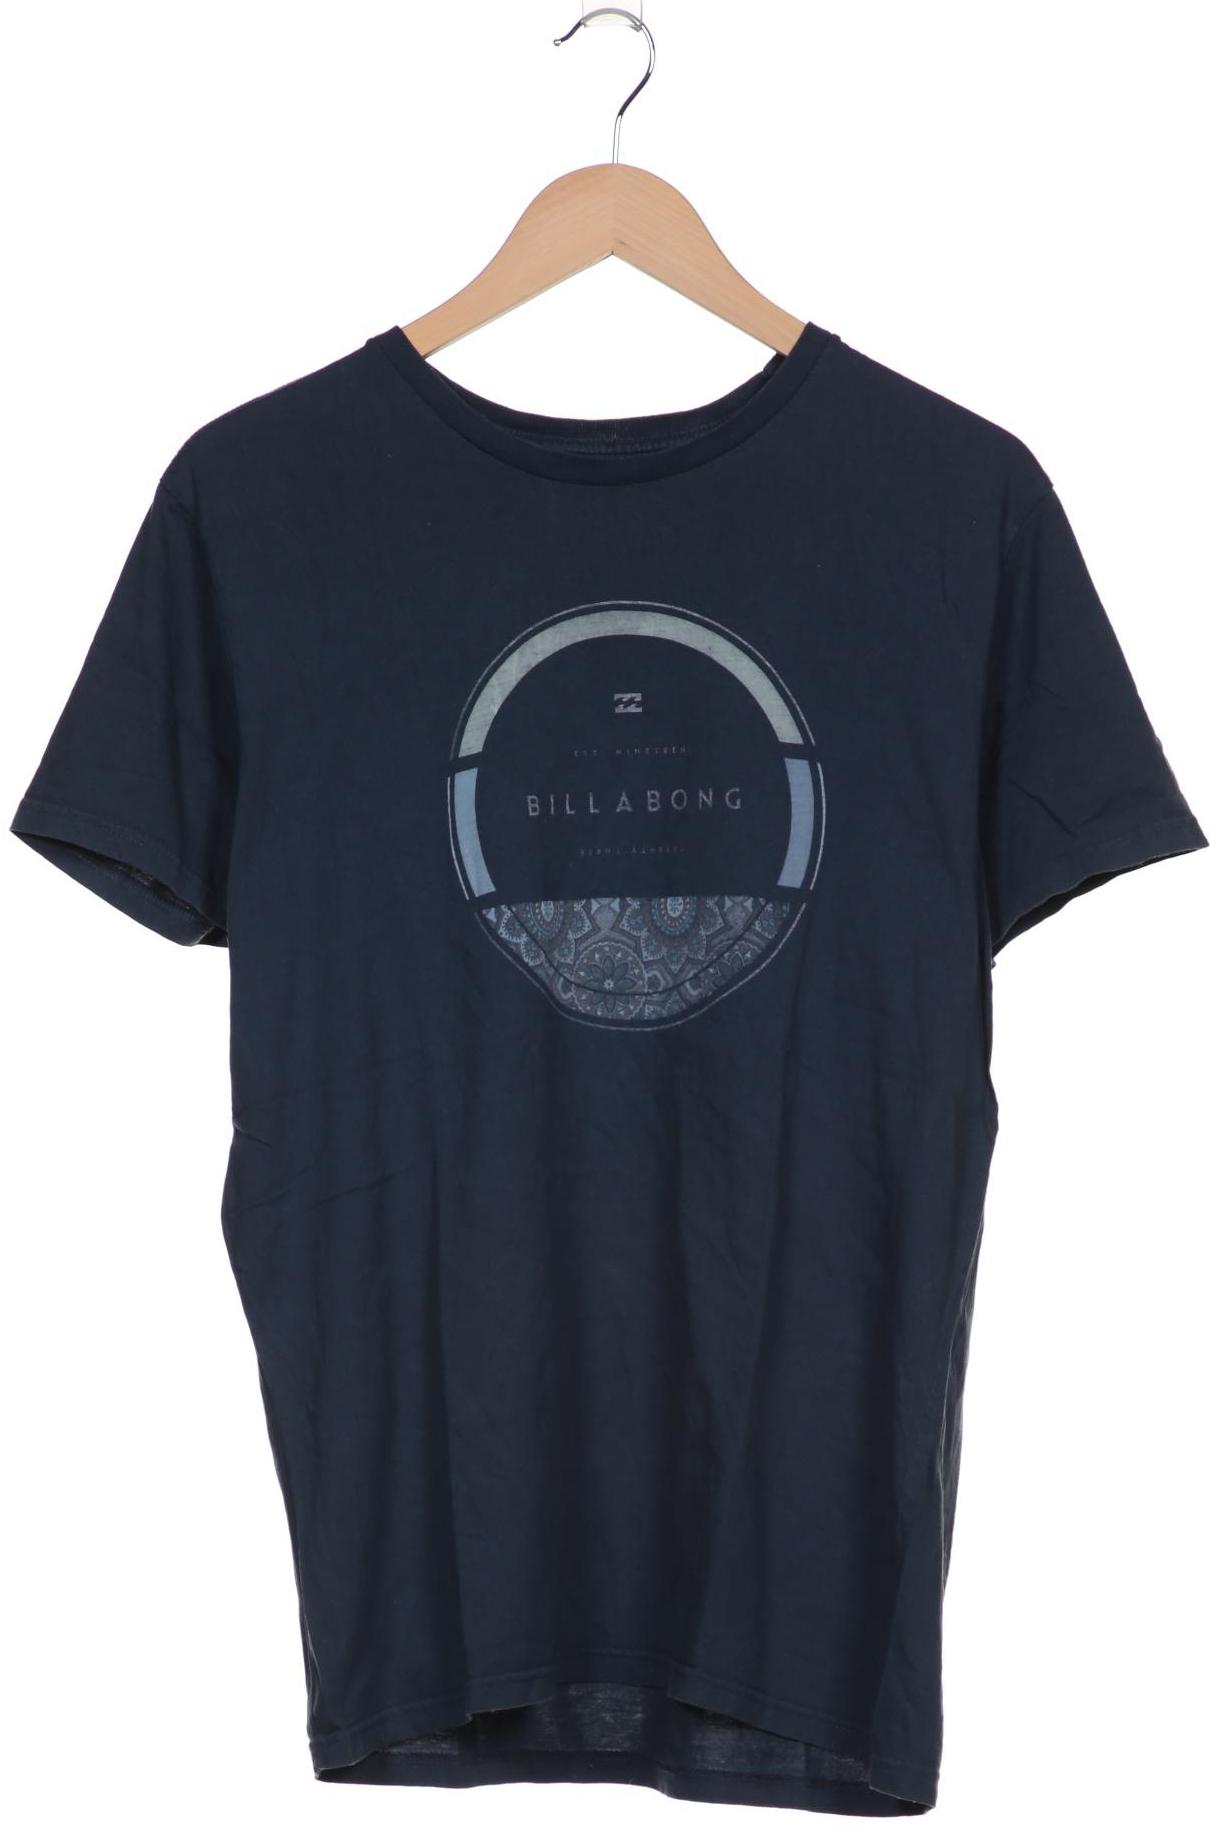 BILLABONG Herren T-Shirt, marineblau von Billabong